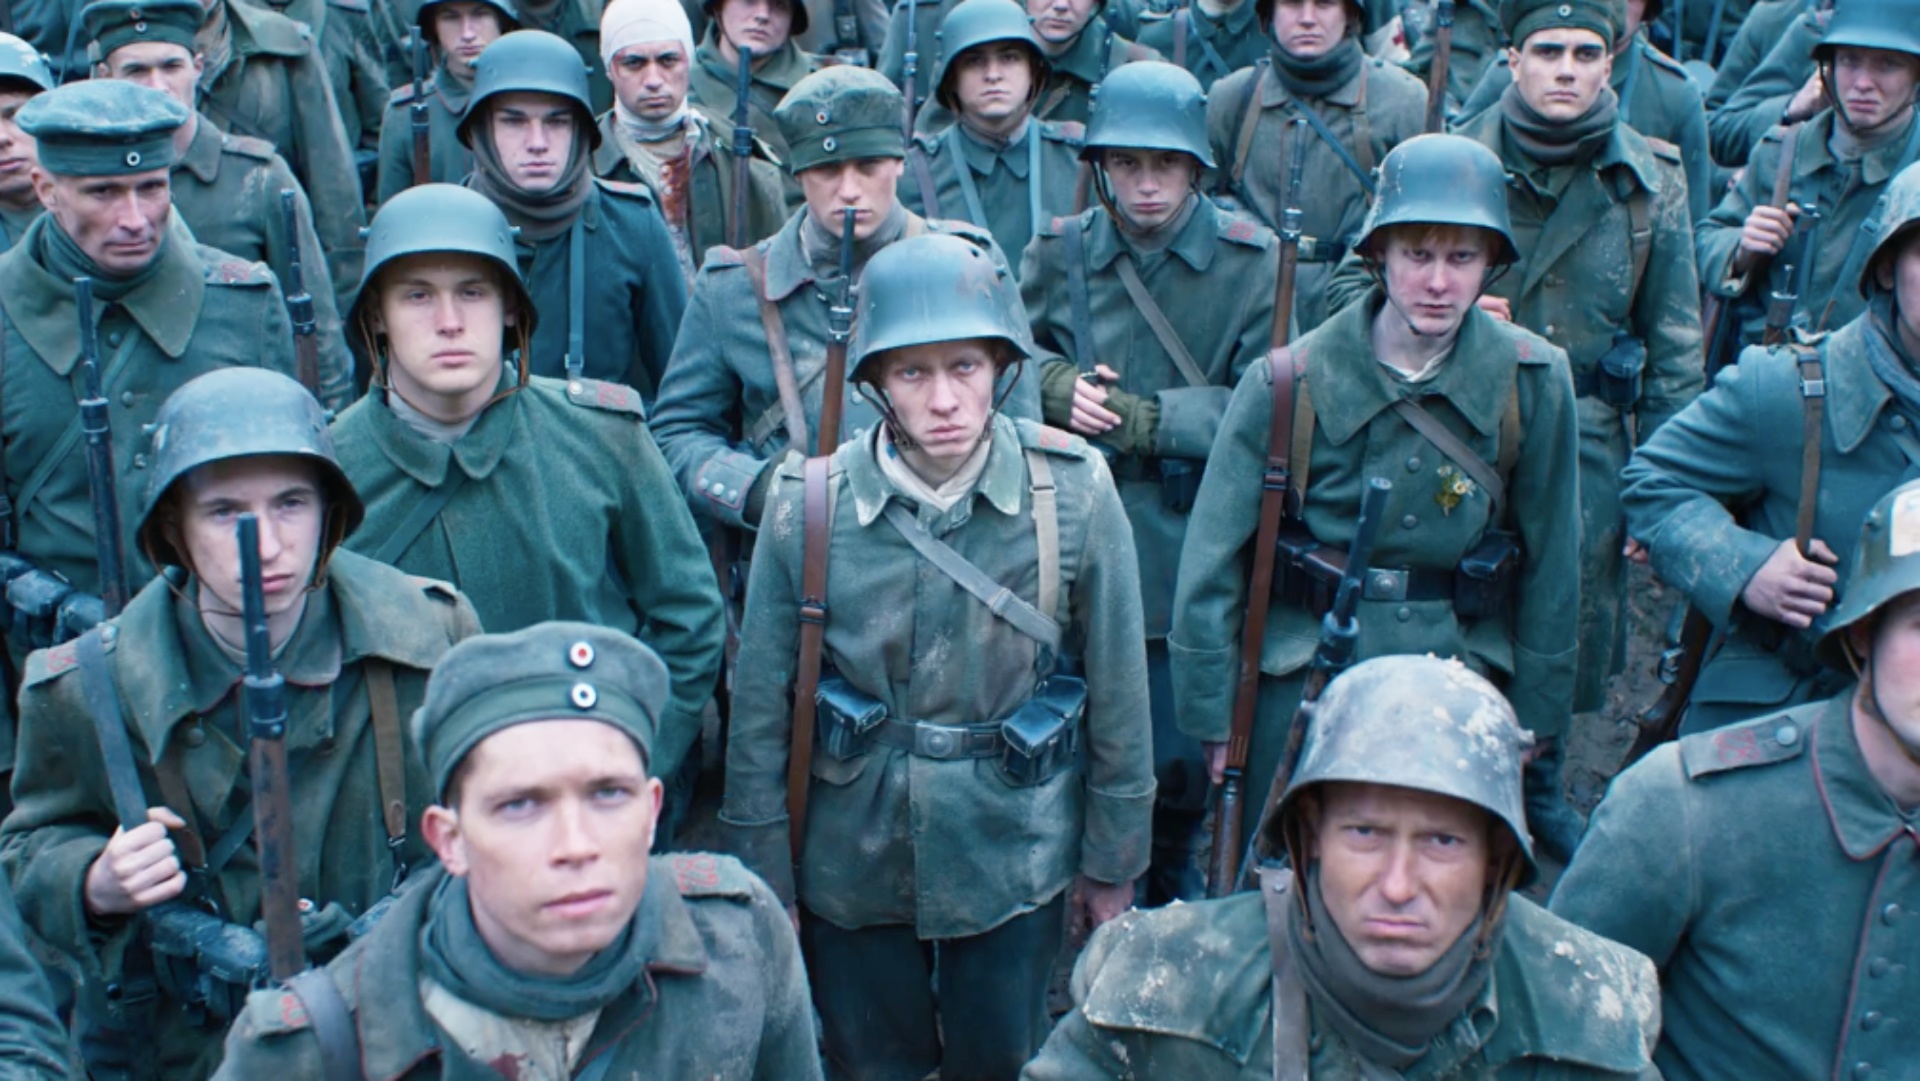 Nada de Novo no Front: filme da Netflix conta horrores da 1ª Guerra Mundial